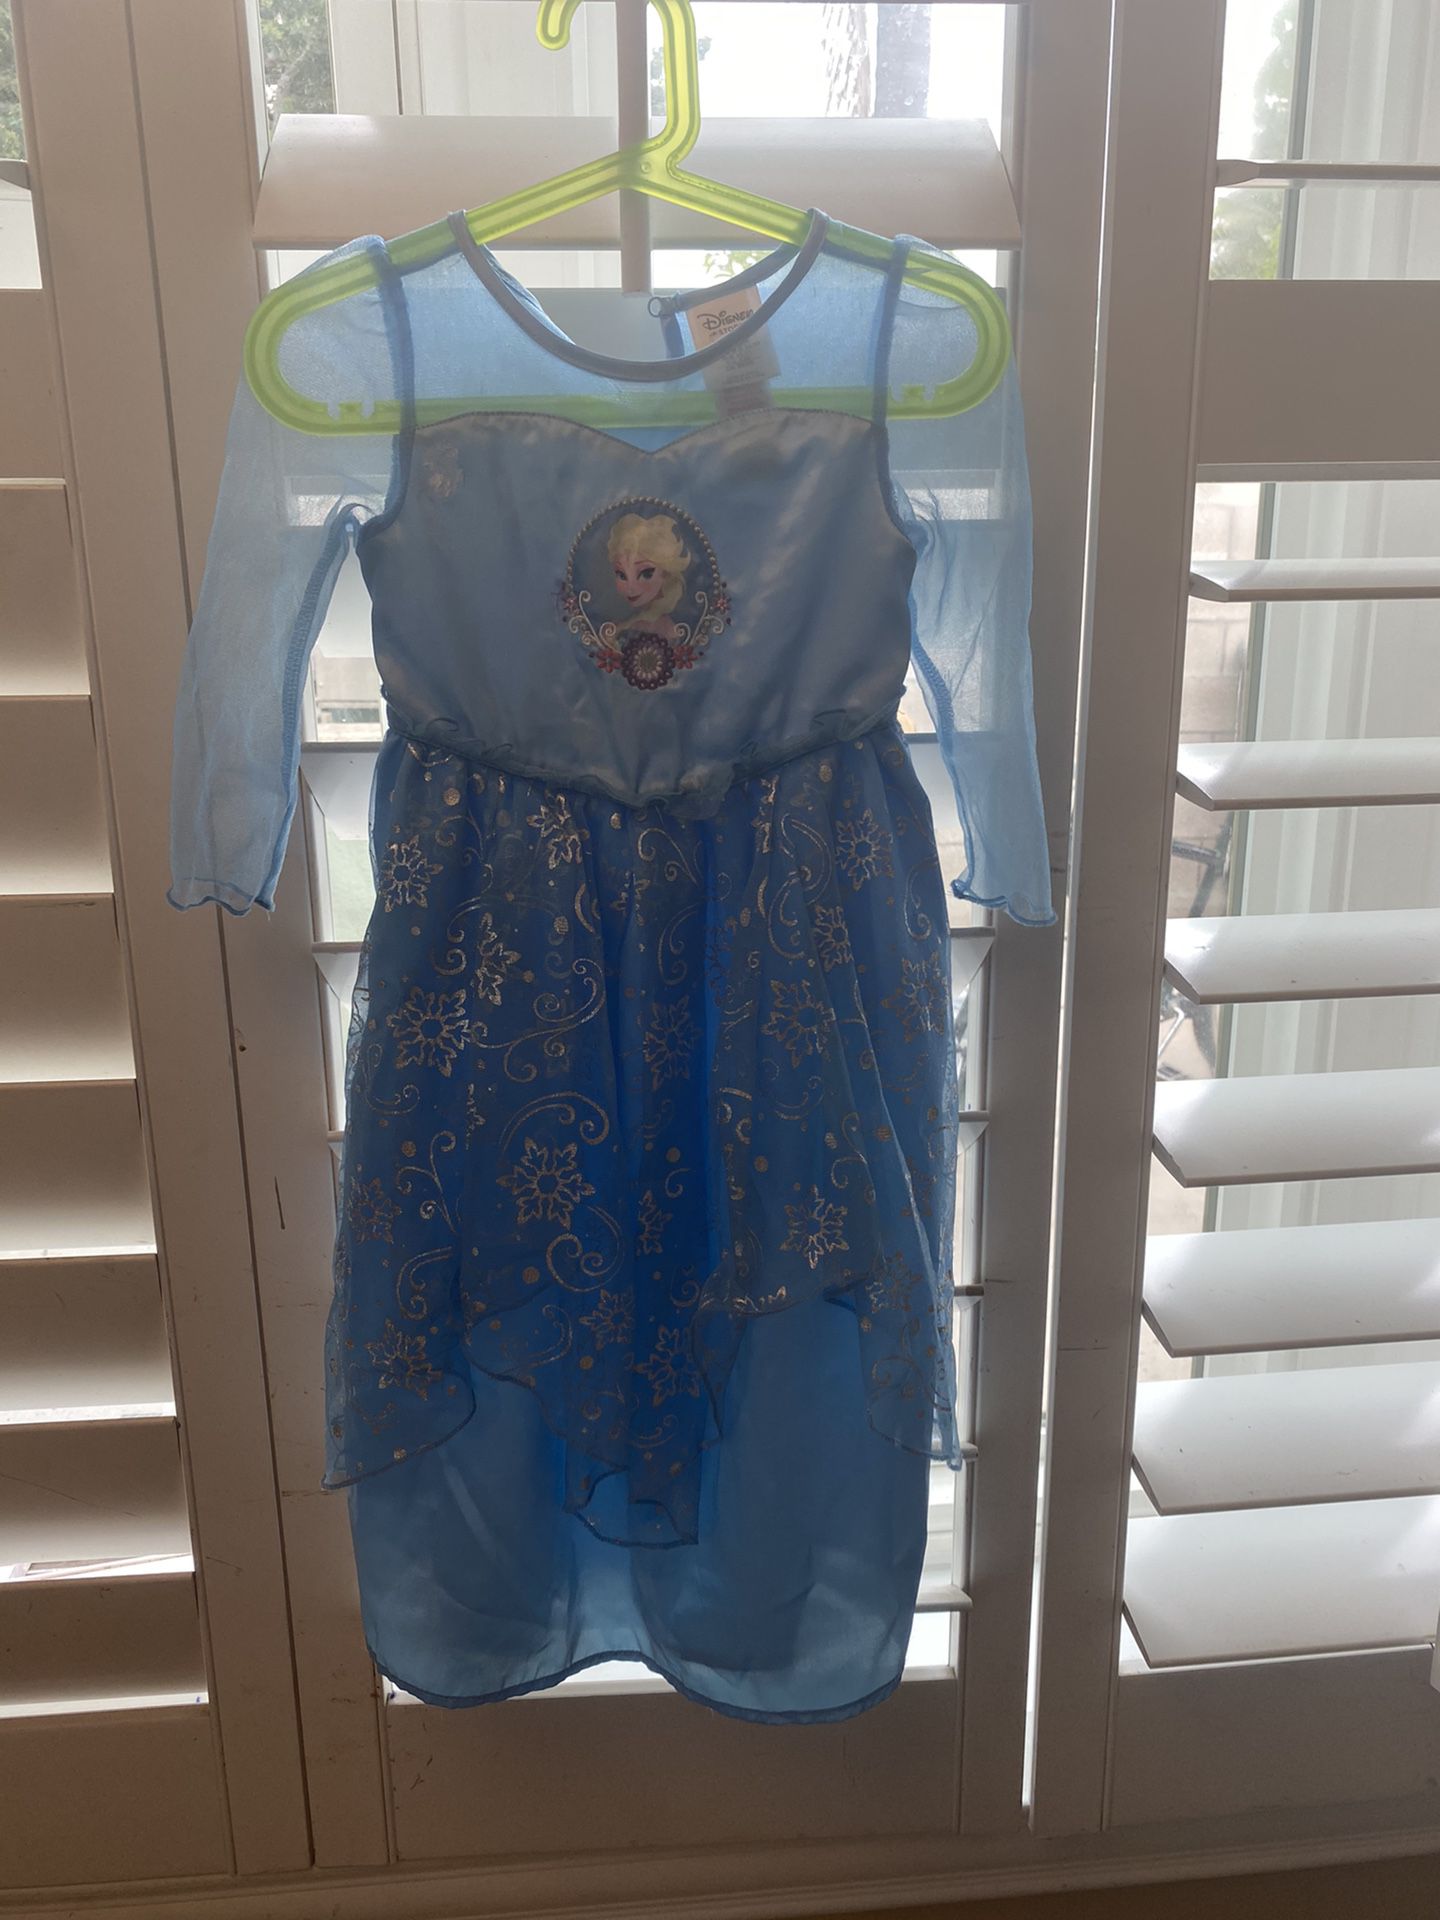 Elsa/ Frozen girl costume size 2